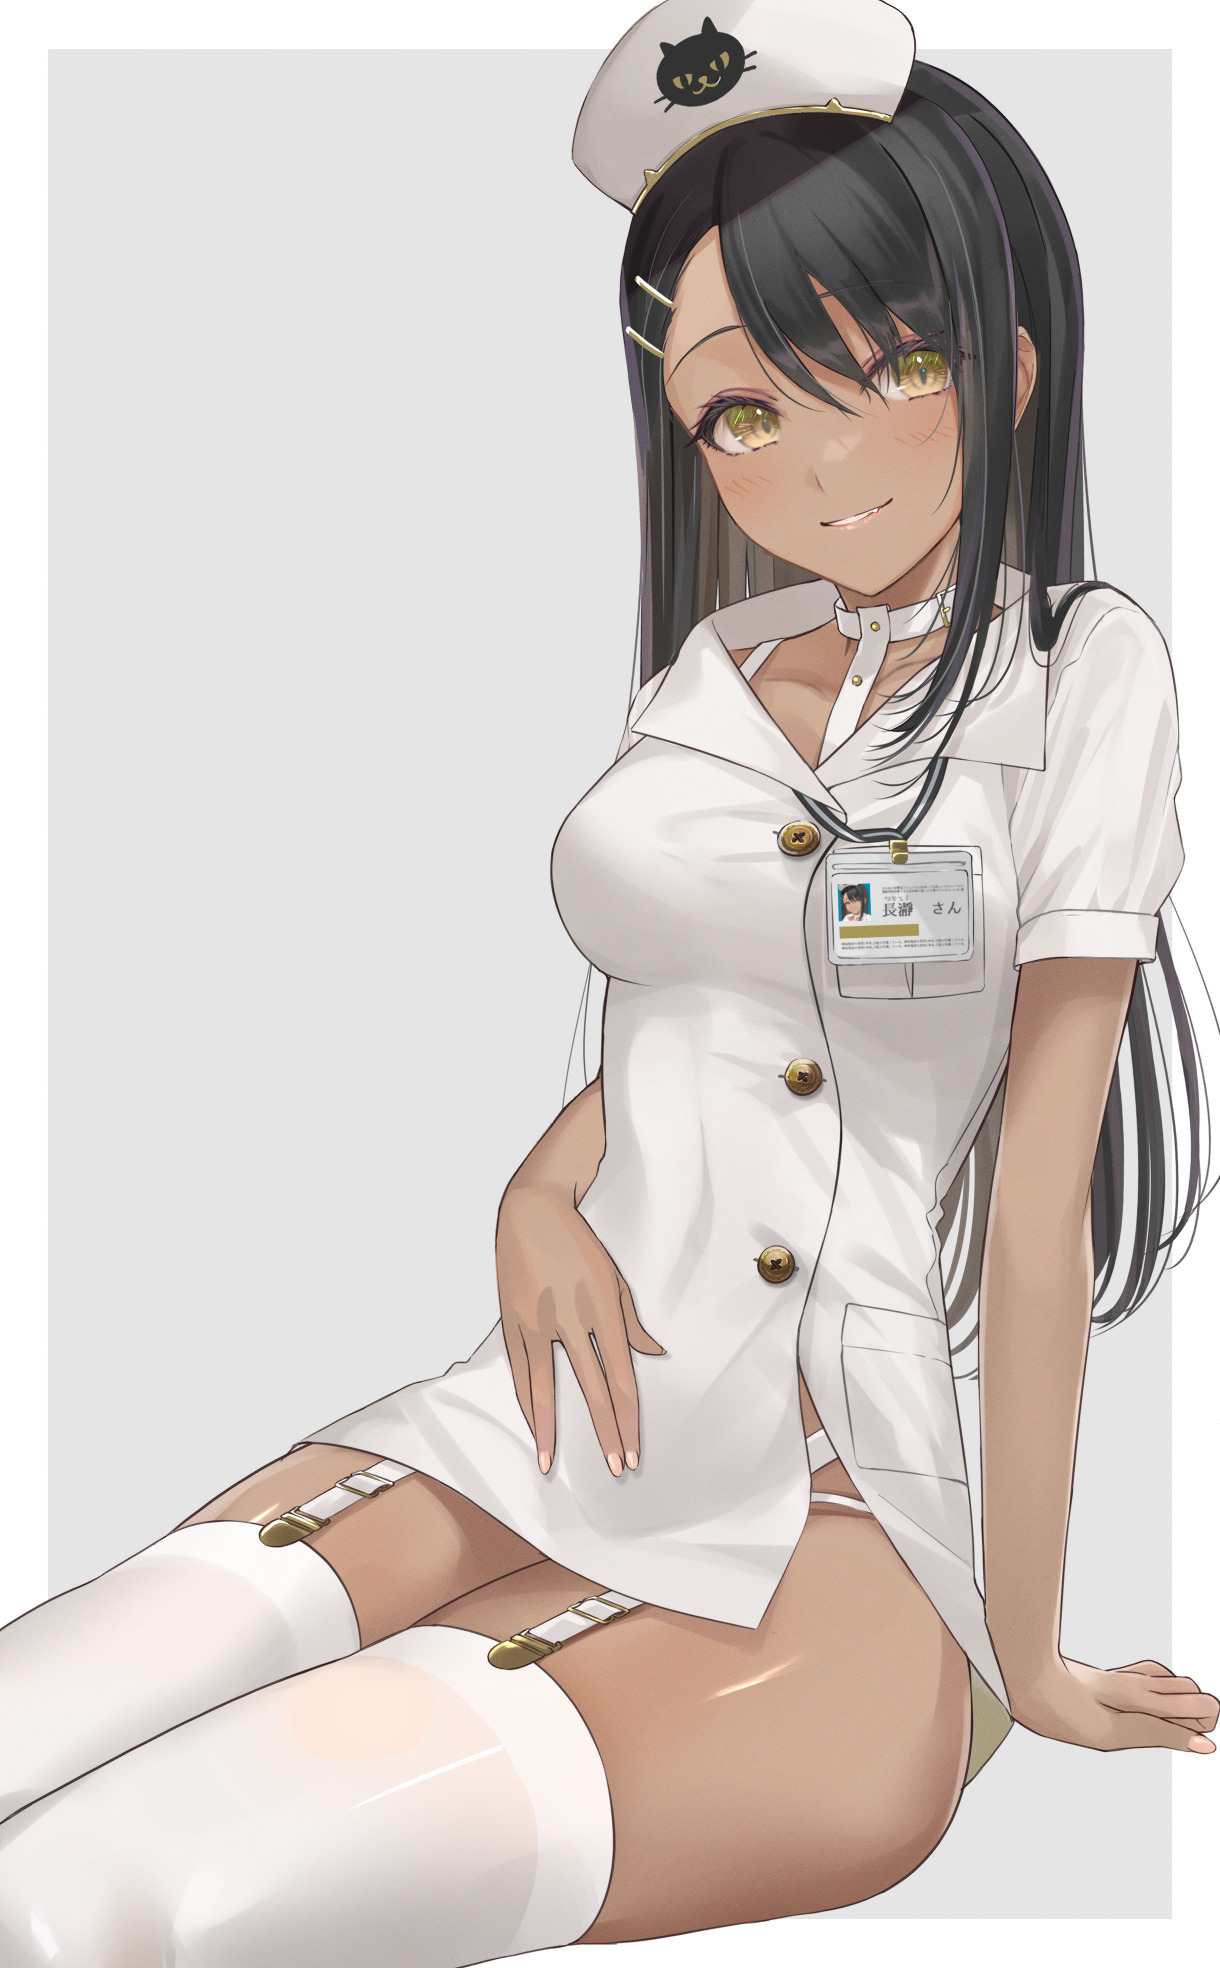 Planet Anime — “Nurse” Hayase Nagatoro [Please Don't Bully Me,...